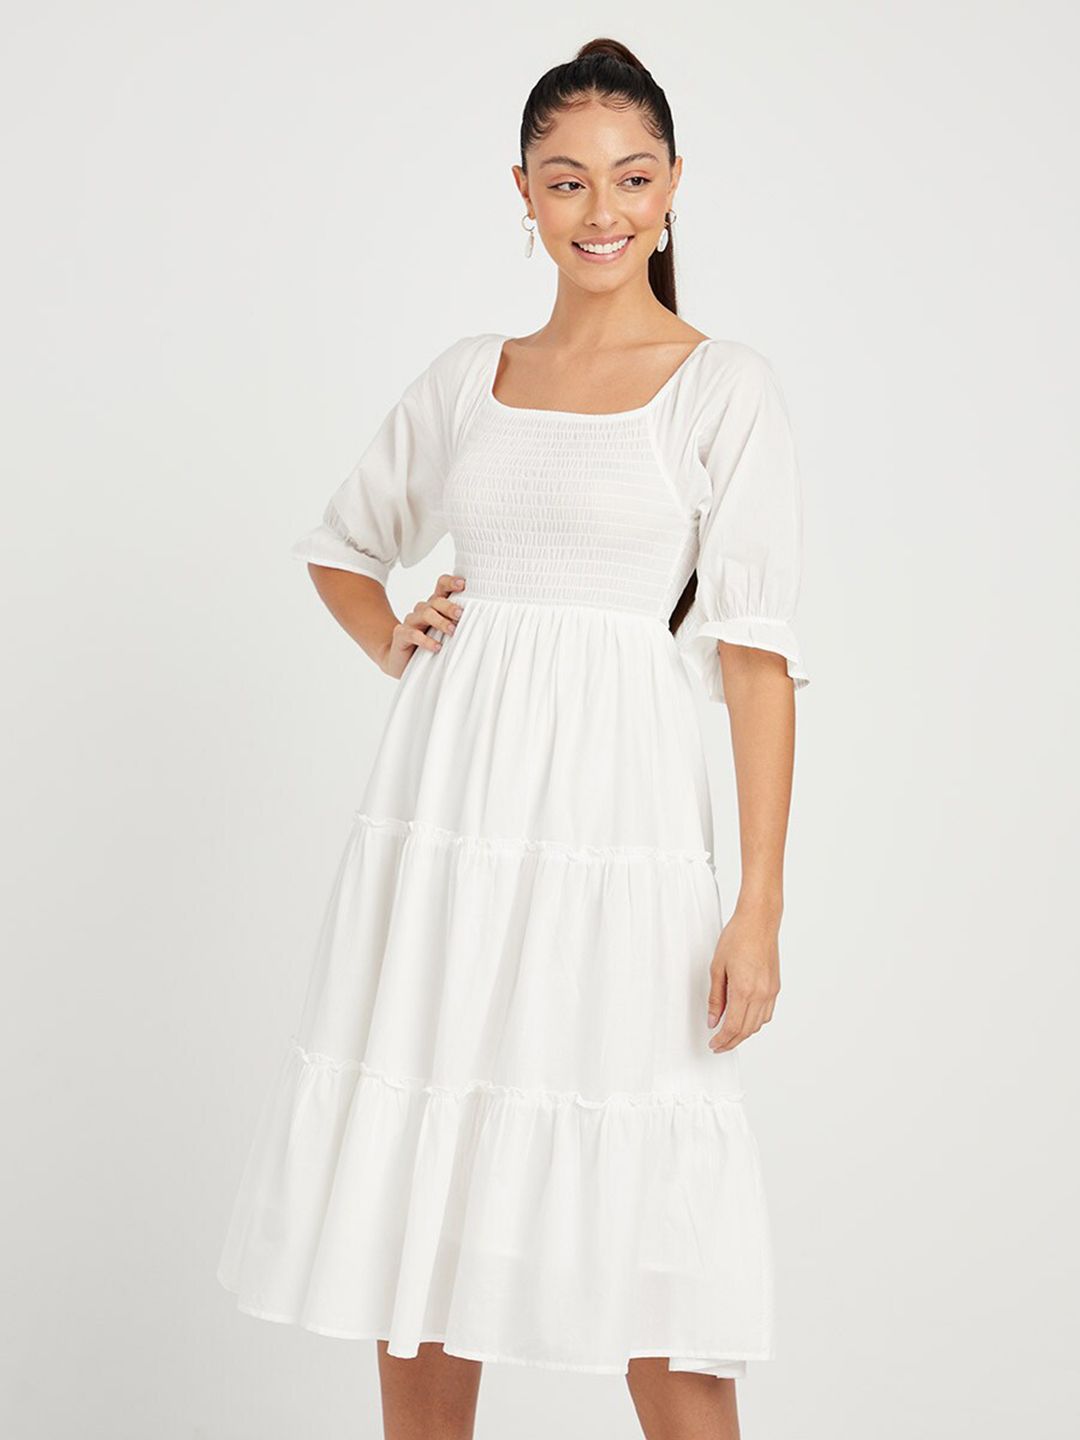 Styli White Dress Price in India